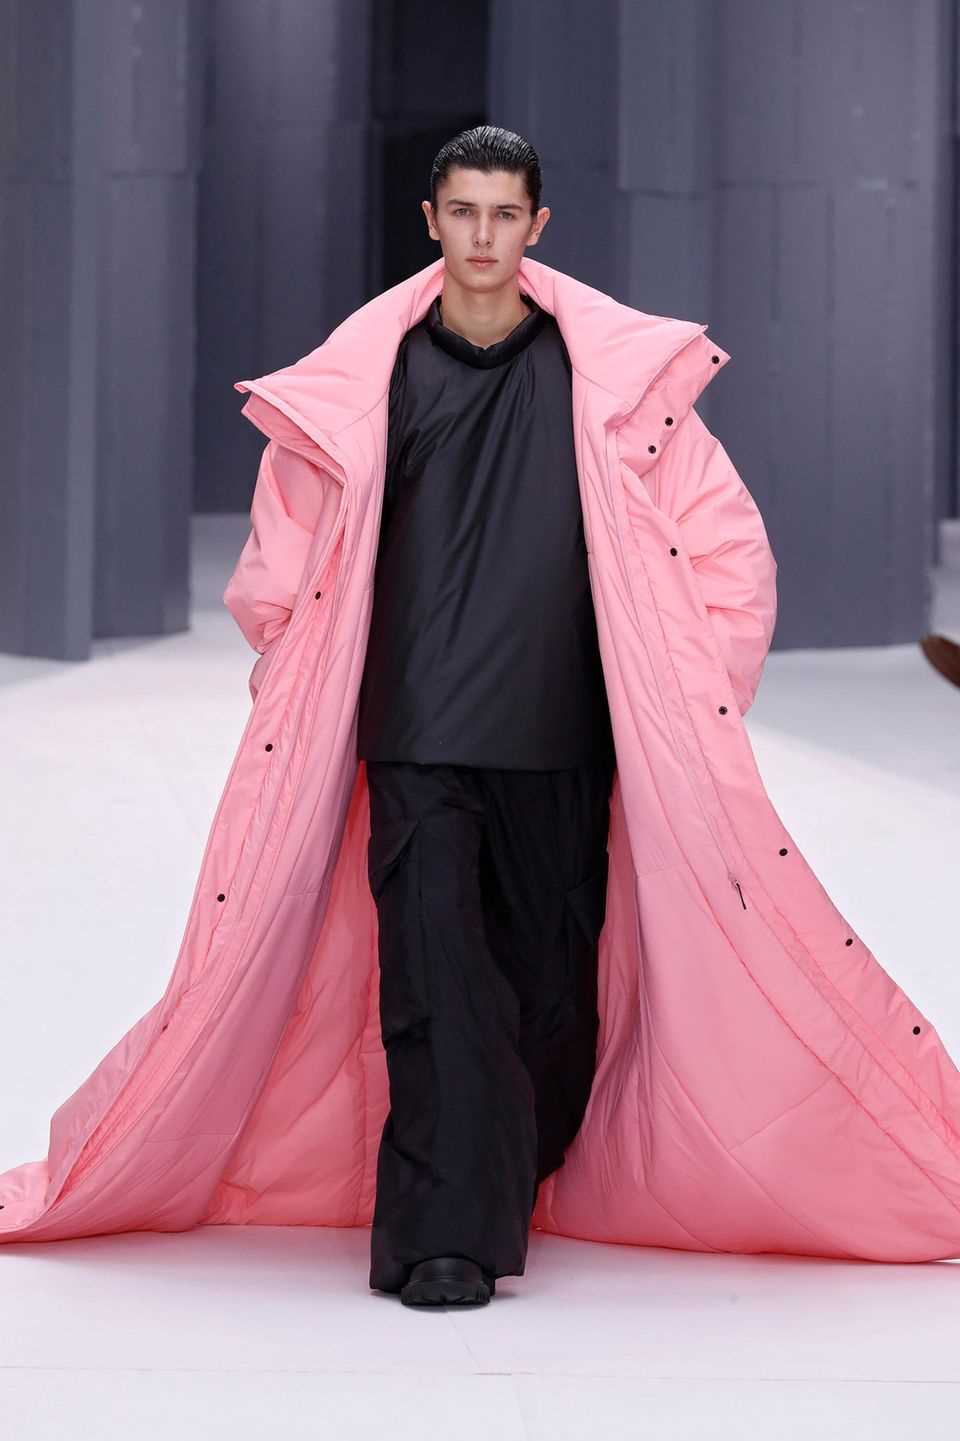 Prince Nikolai walks the runway for "Rains" at Paris Fashion Week